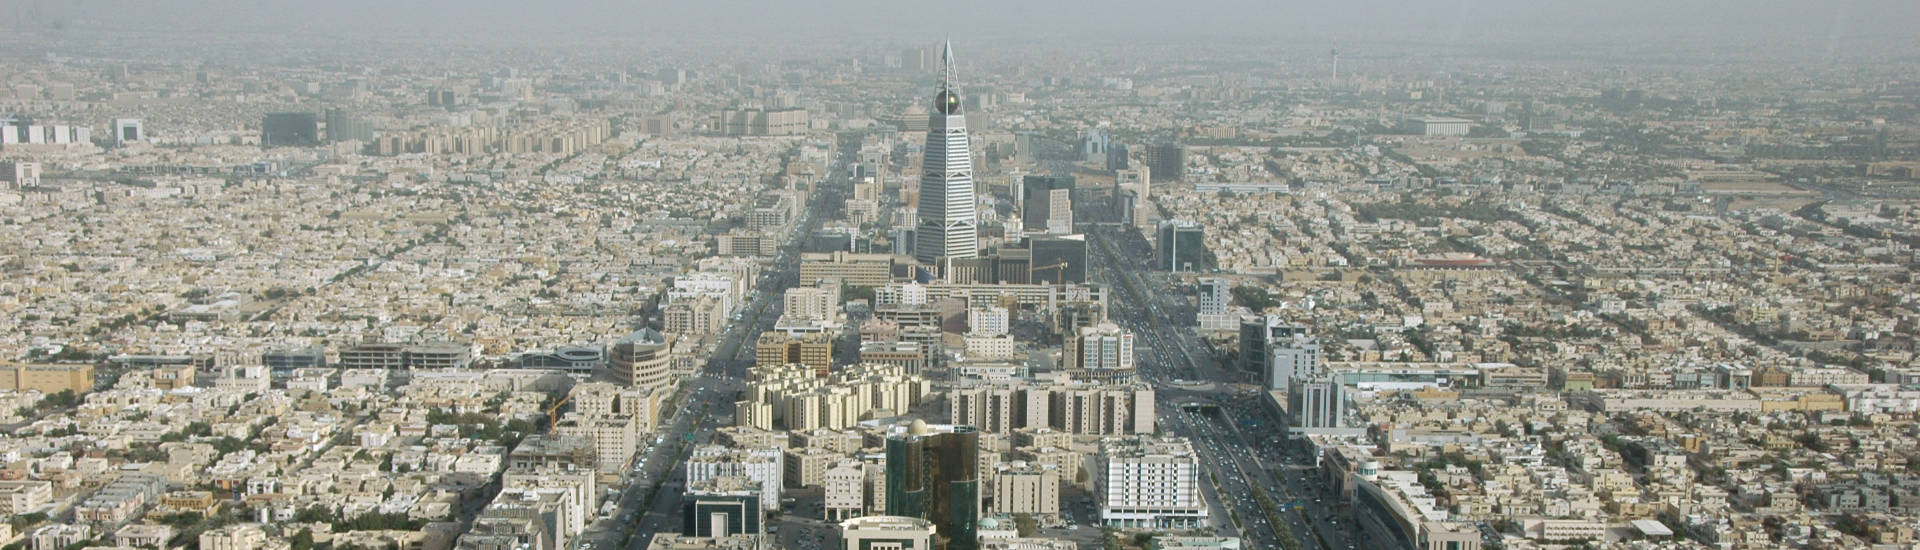 Car-oriented urban development; Riyadh, Saudi Arabia.